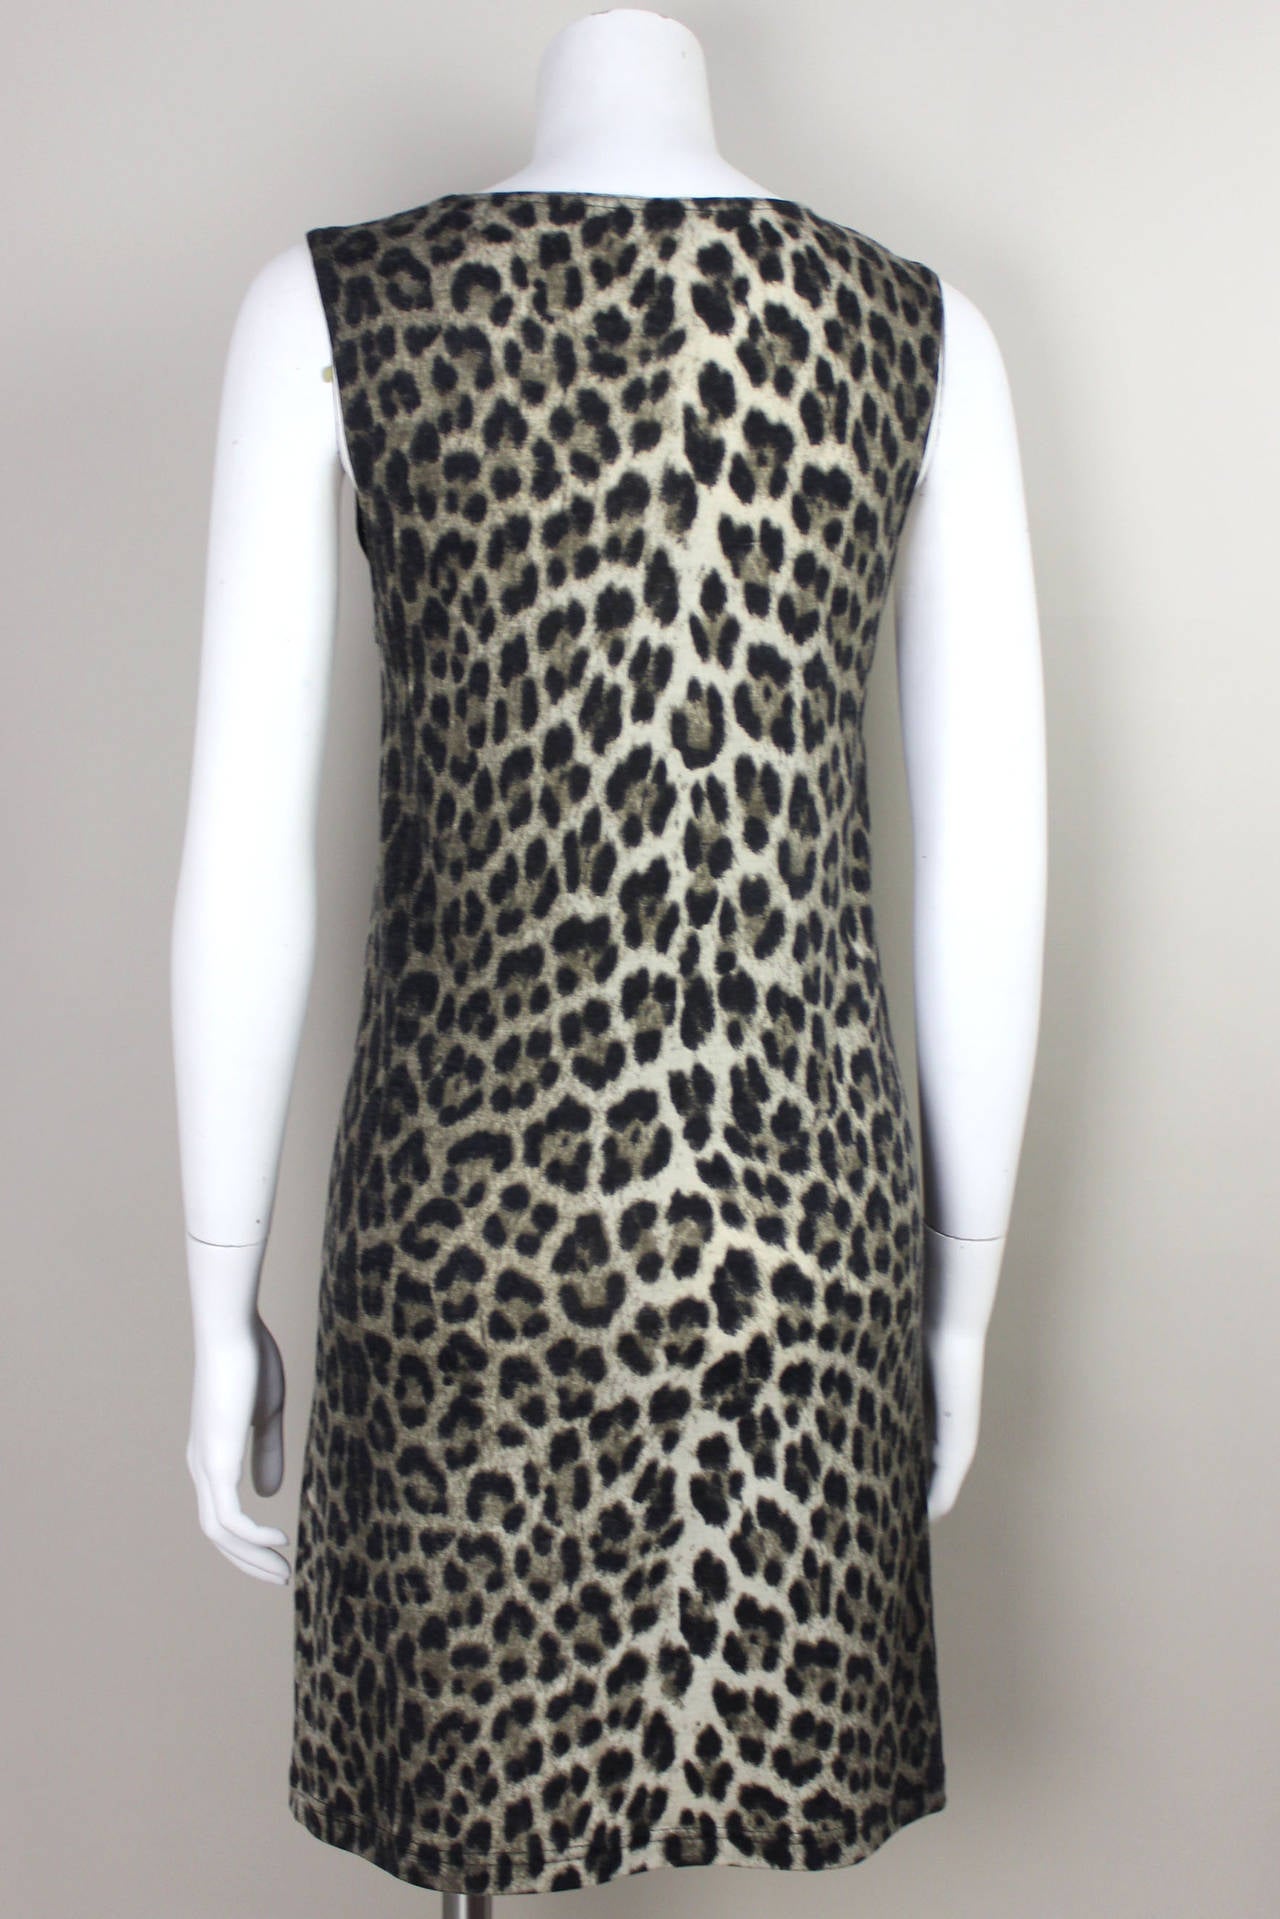 Black Ozbek Leopard Print Sheath Dress